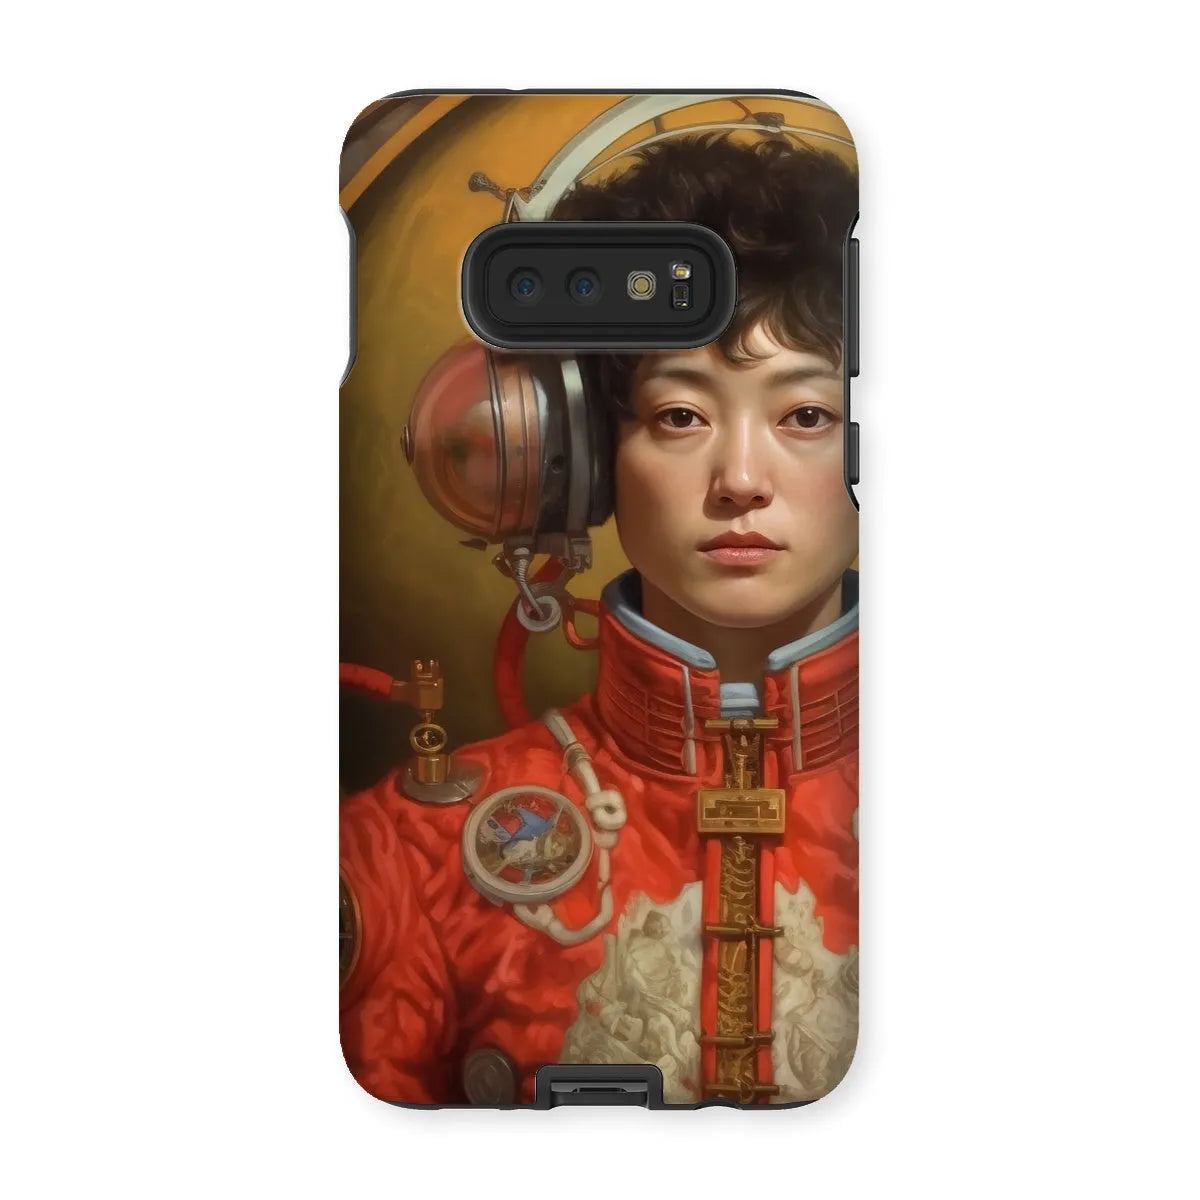 Mùchén - Gay Chinese Astronaut Aesthetic Phone Case - Samsung Galaxy S10e / Matte - Mobile Phone Cases - Aesthetic Art